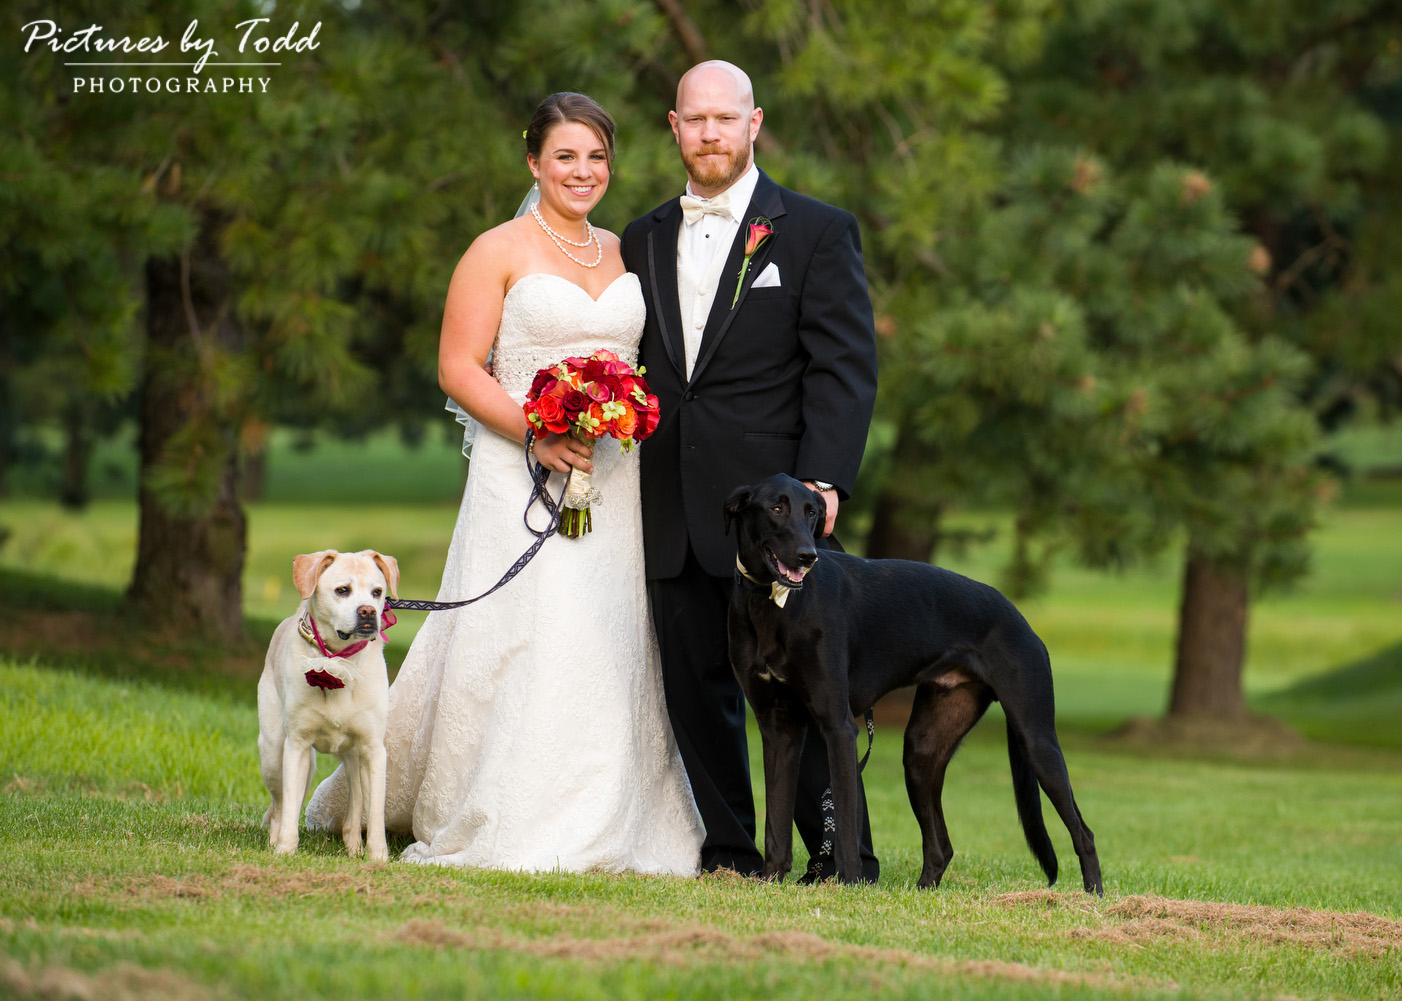 Dogs-Weddings-Portraits-Photos-Fun-Ideas